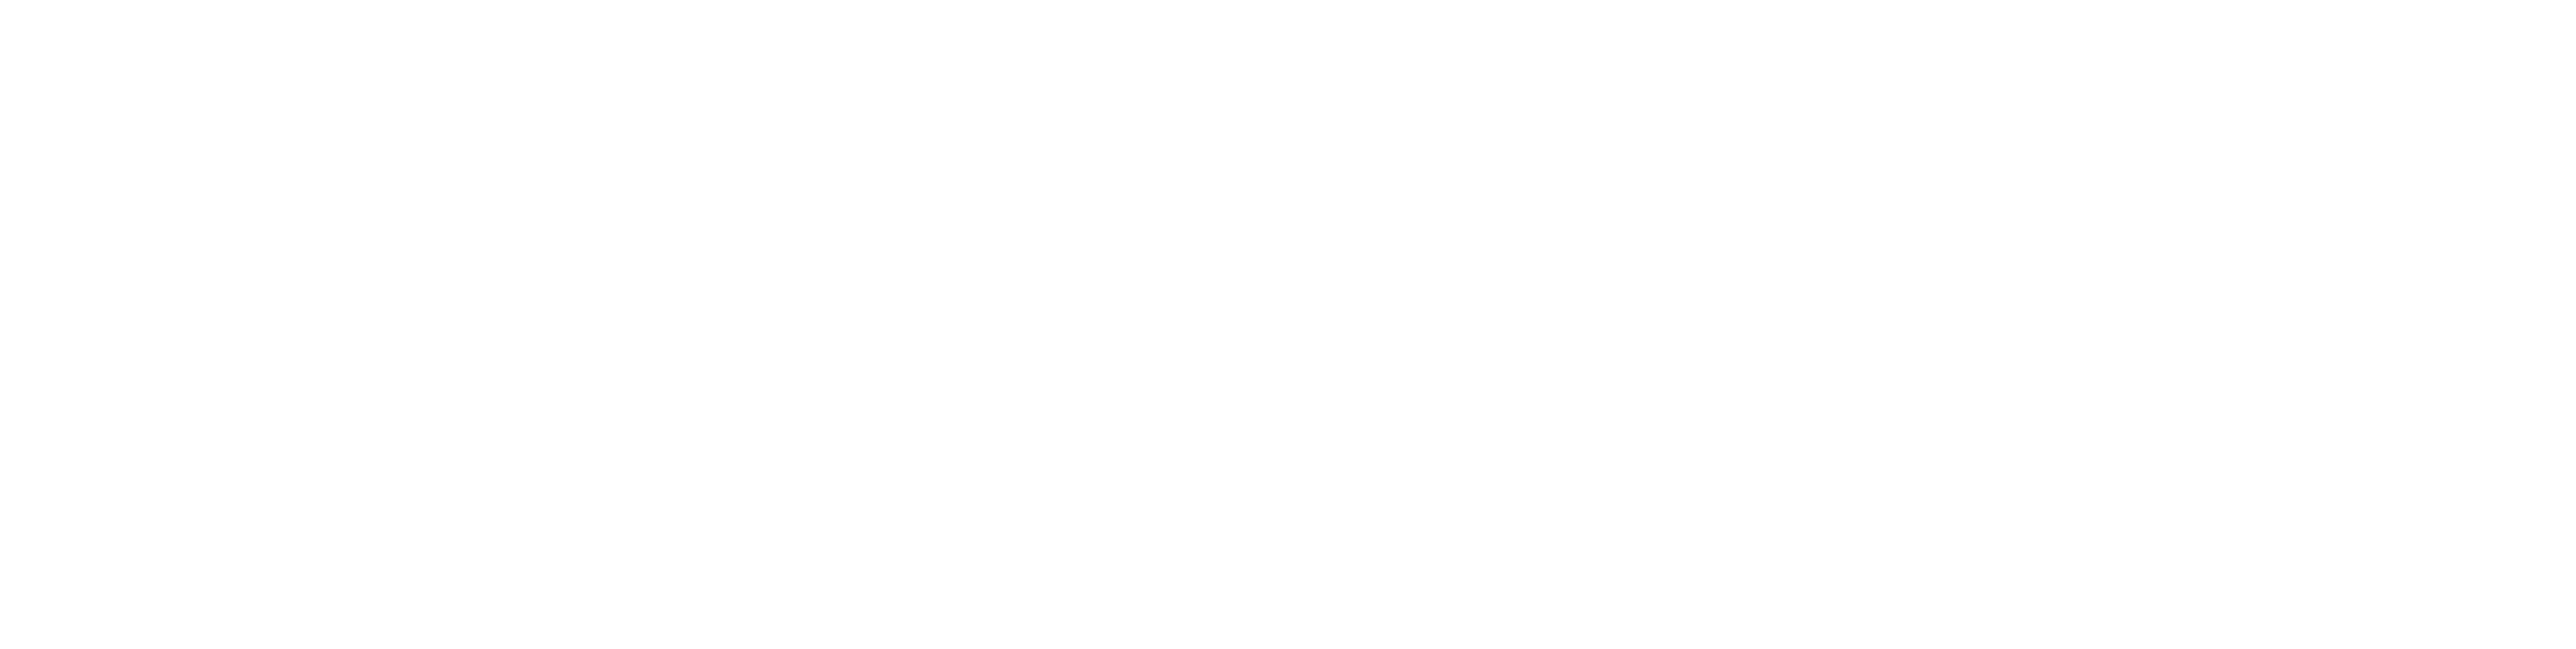 Missoula Substance Use Disorder Connect Logo